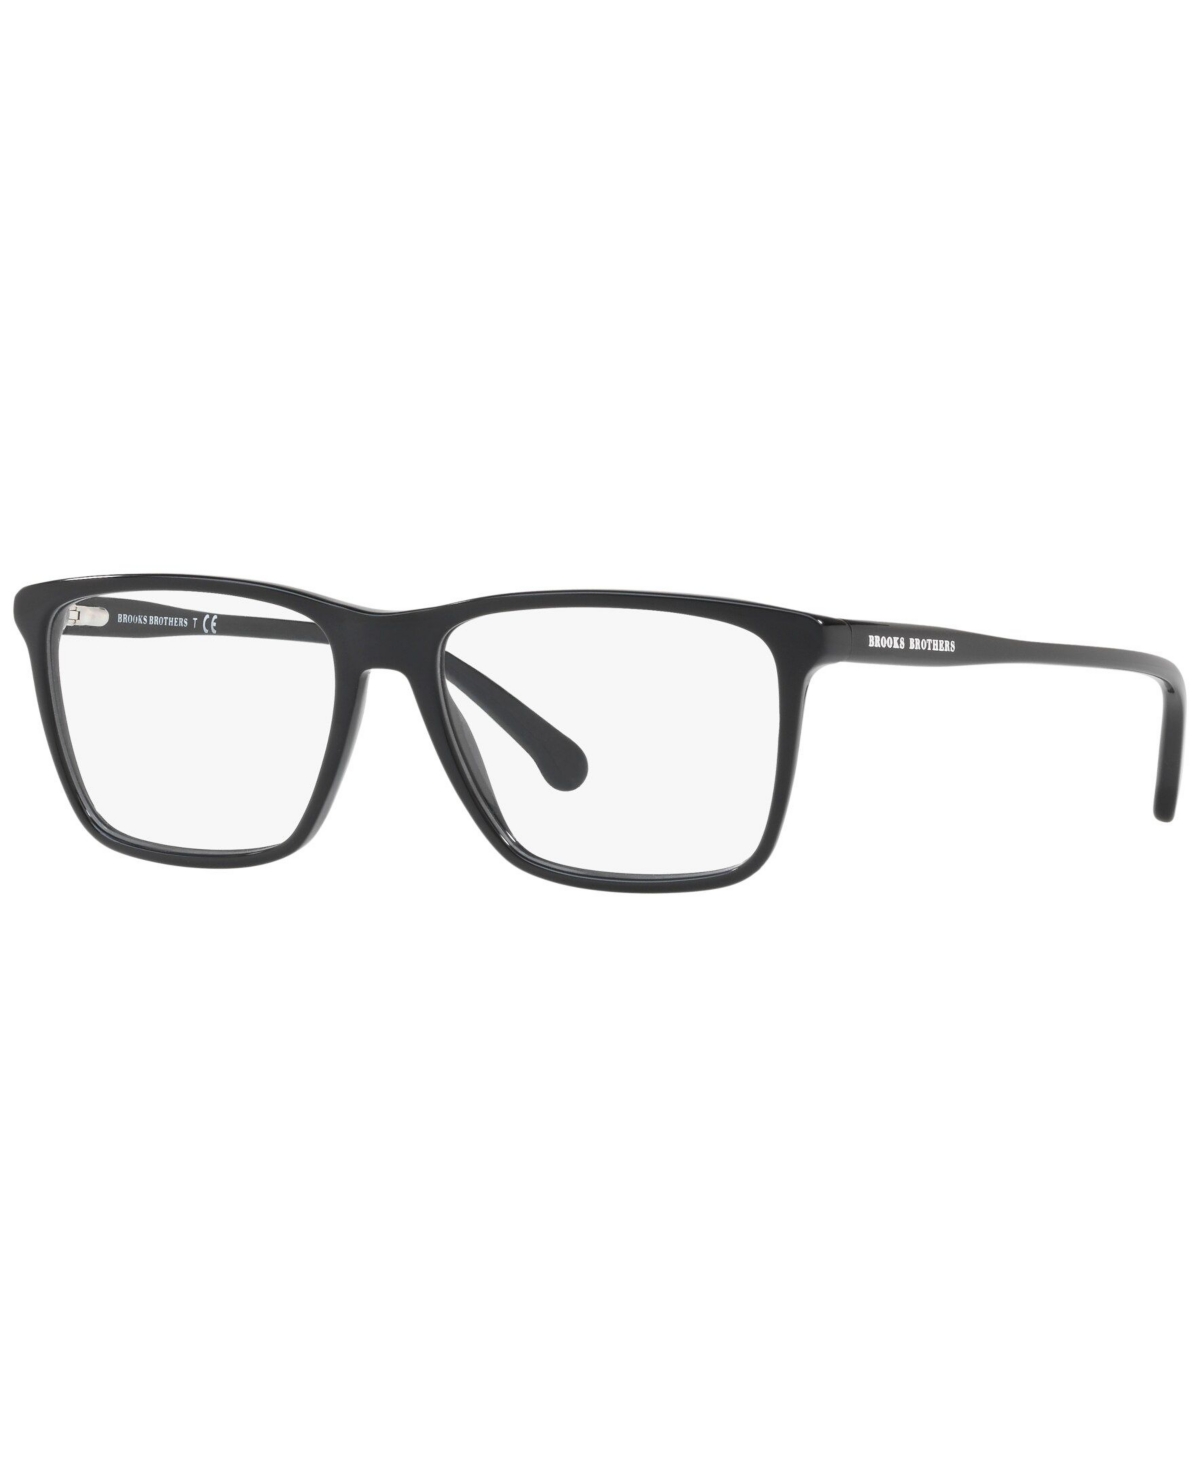 BB2037 Men's Square Eyeglasses - Black